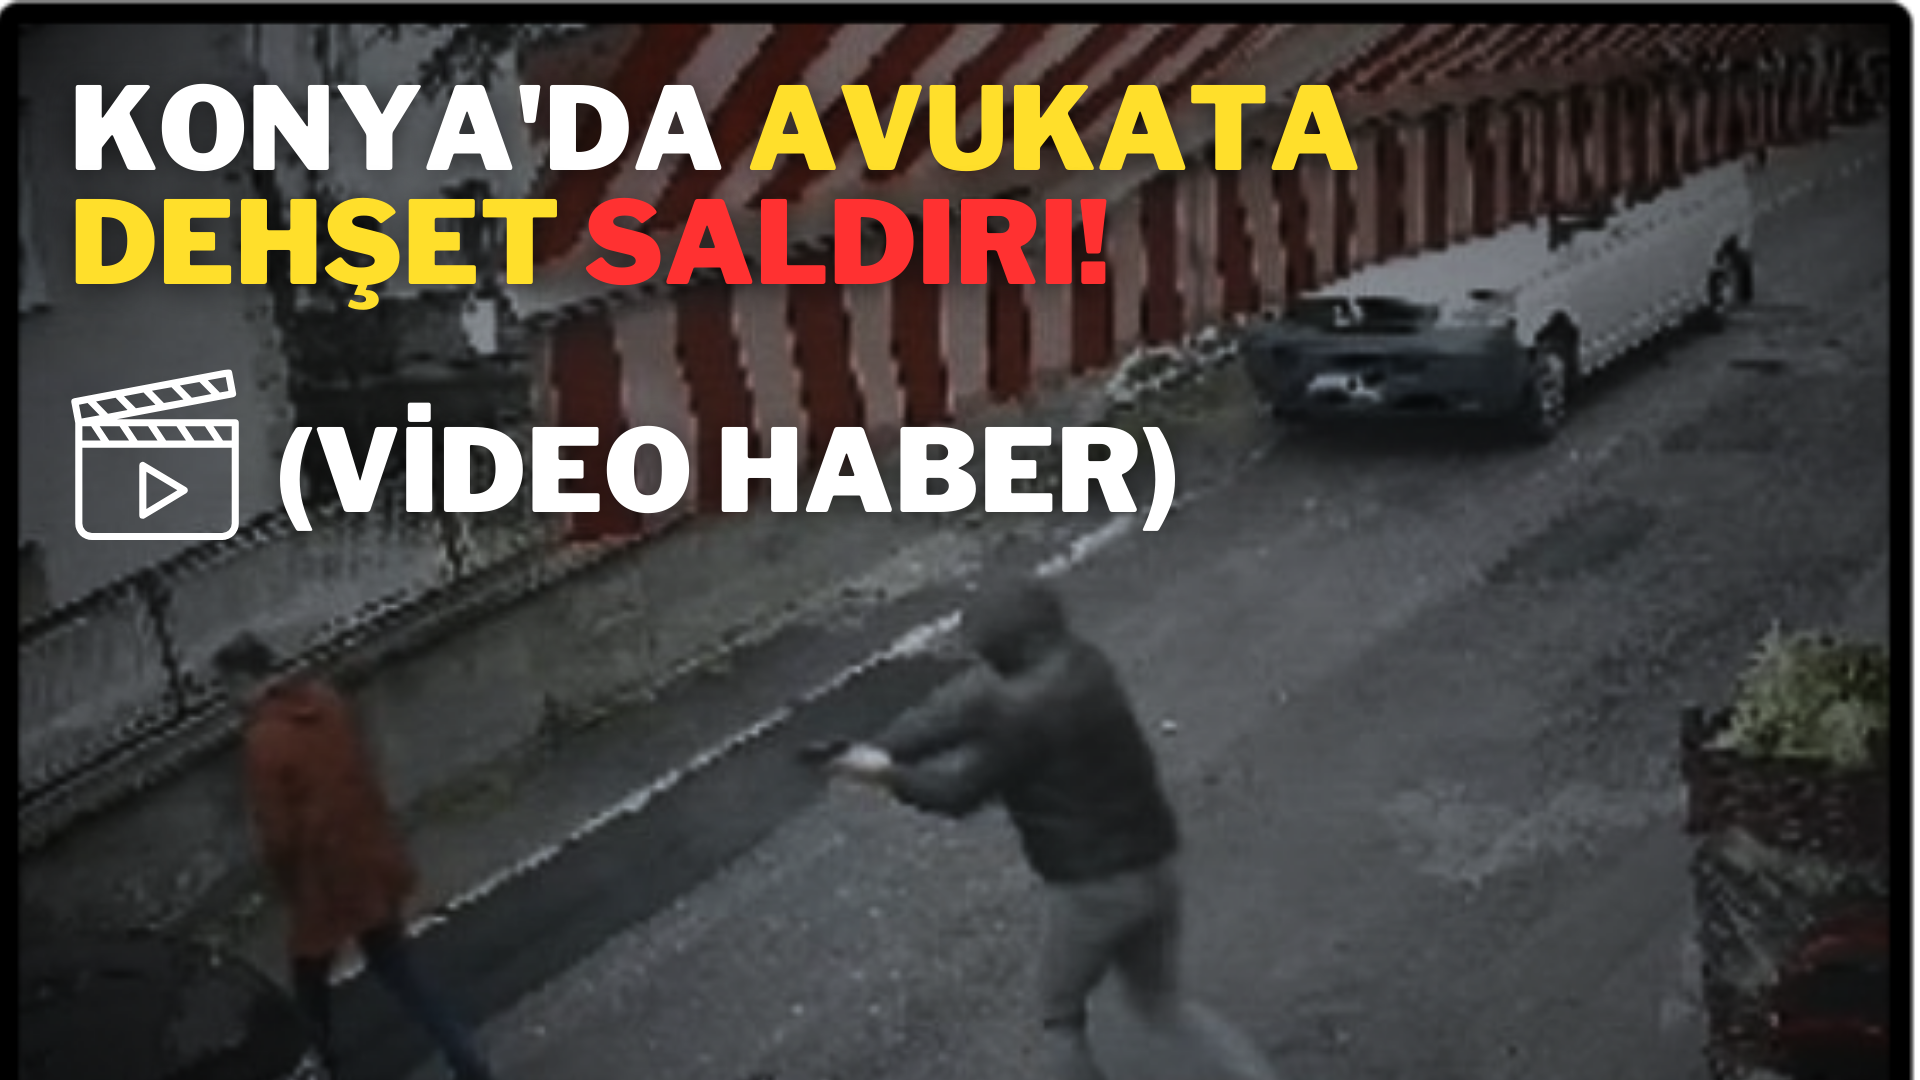 Konya'da Avukata Dehşet Saldırı! (VİDEO HABER)